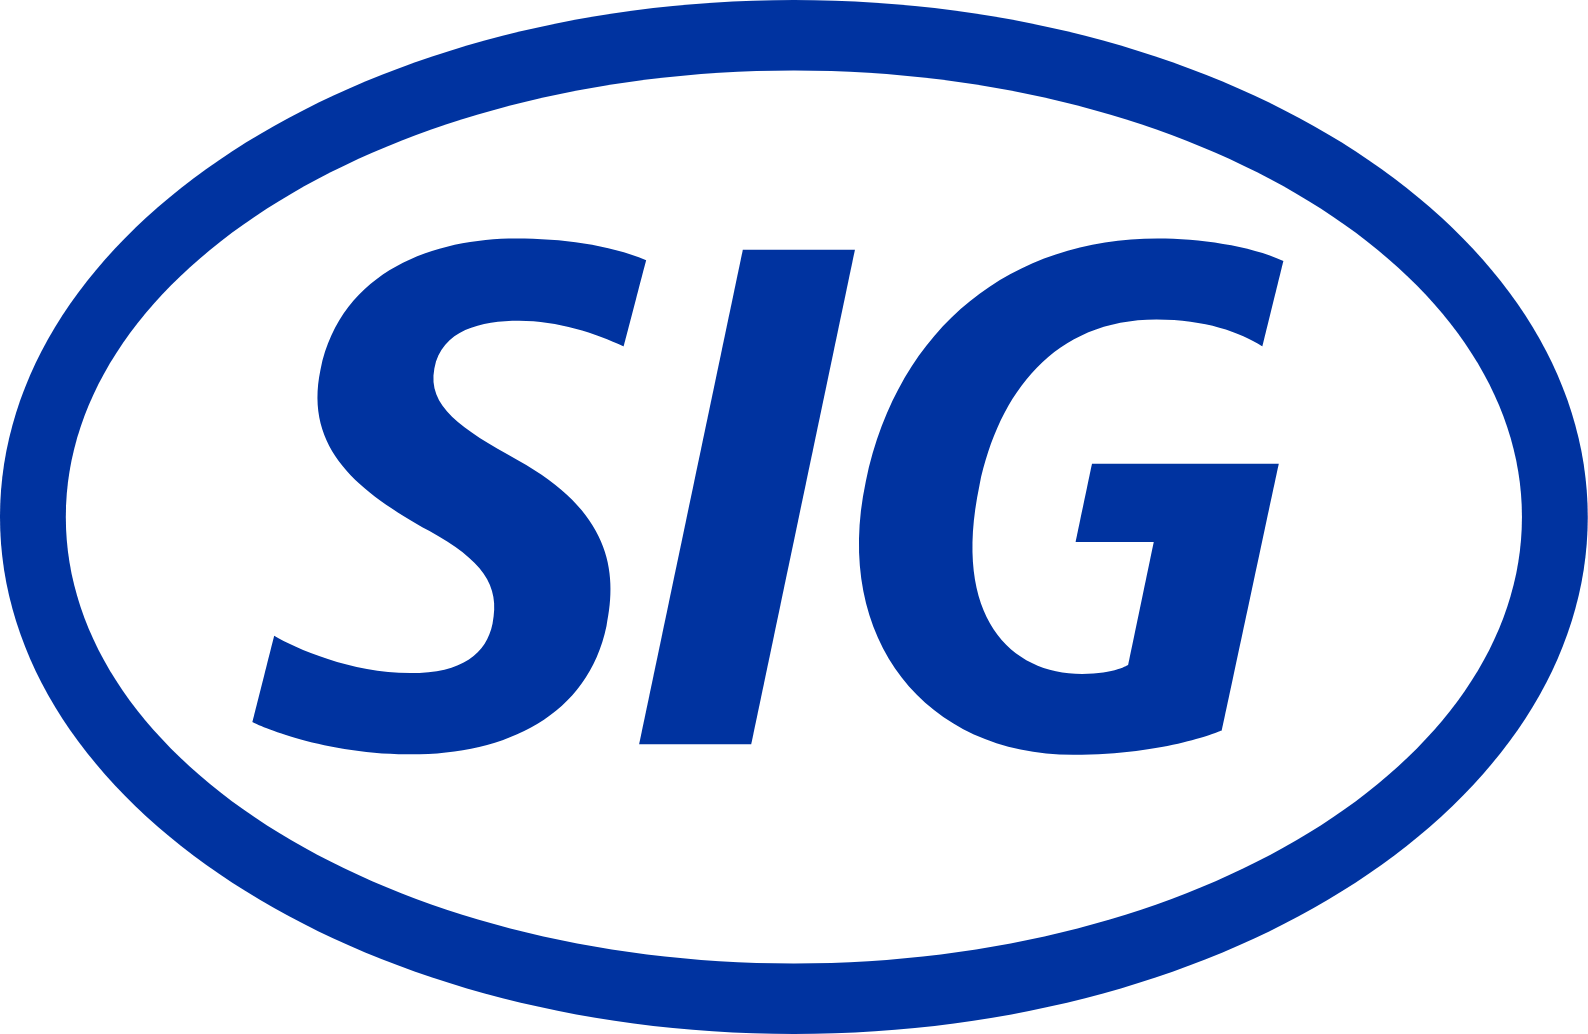 SIG Combibloc logo (transparent PNG)